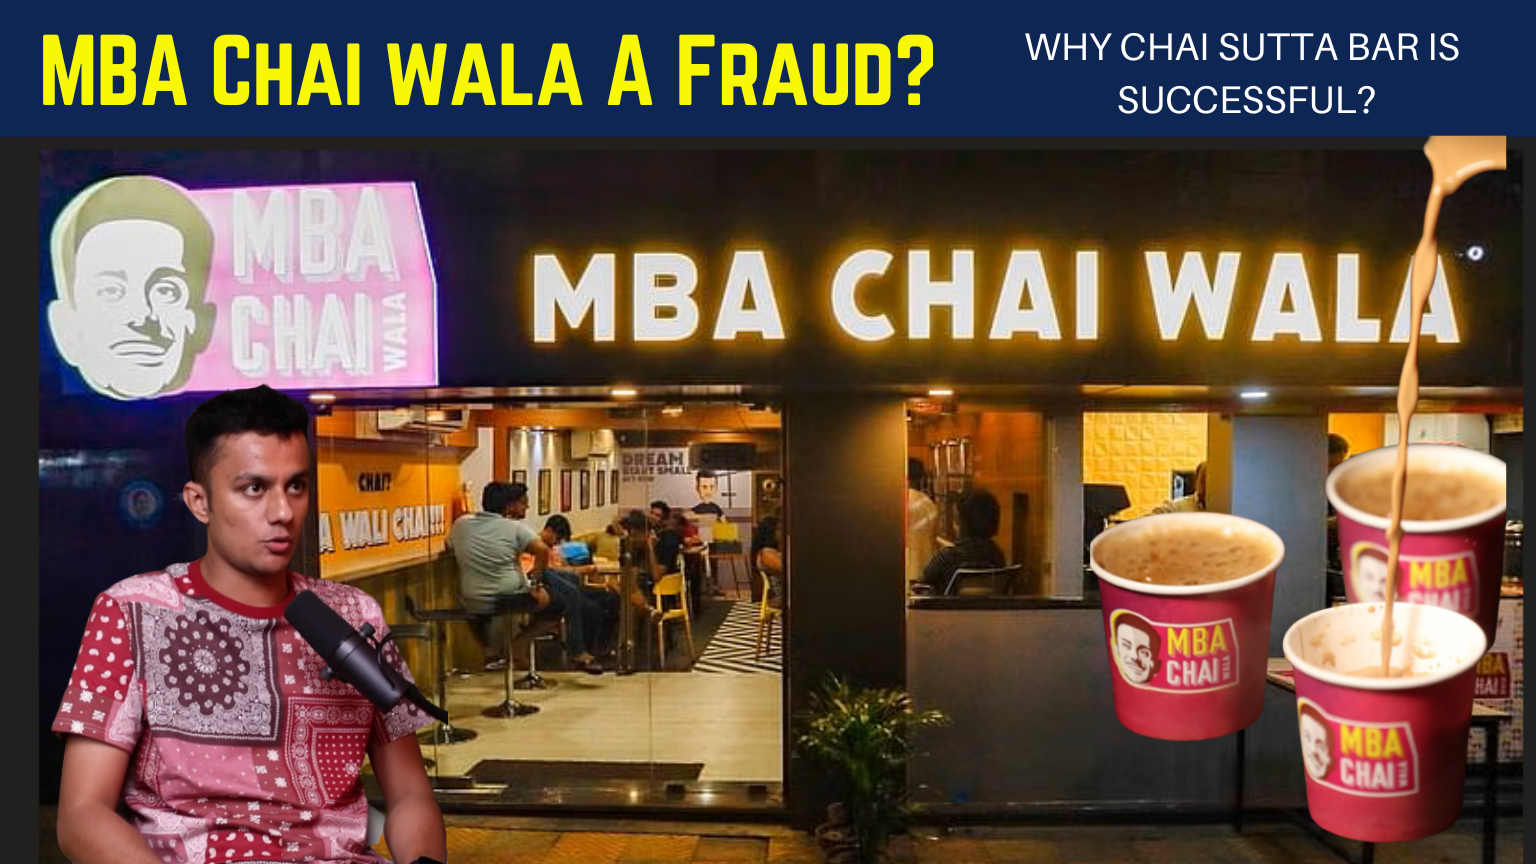 MBA chaiwala franchise